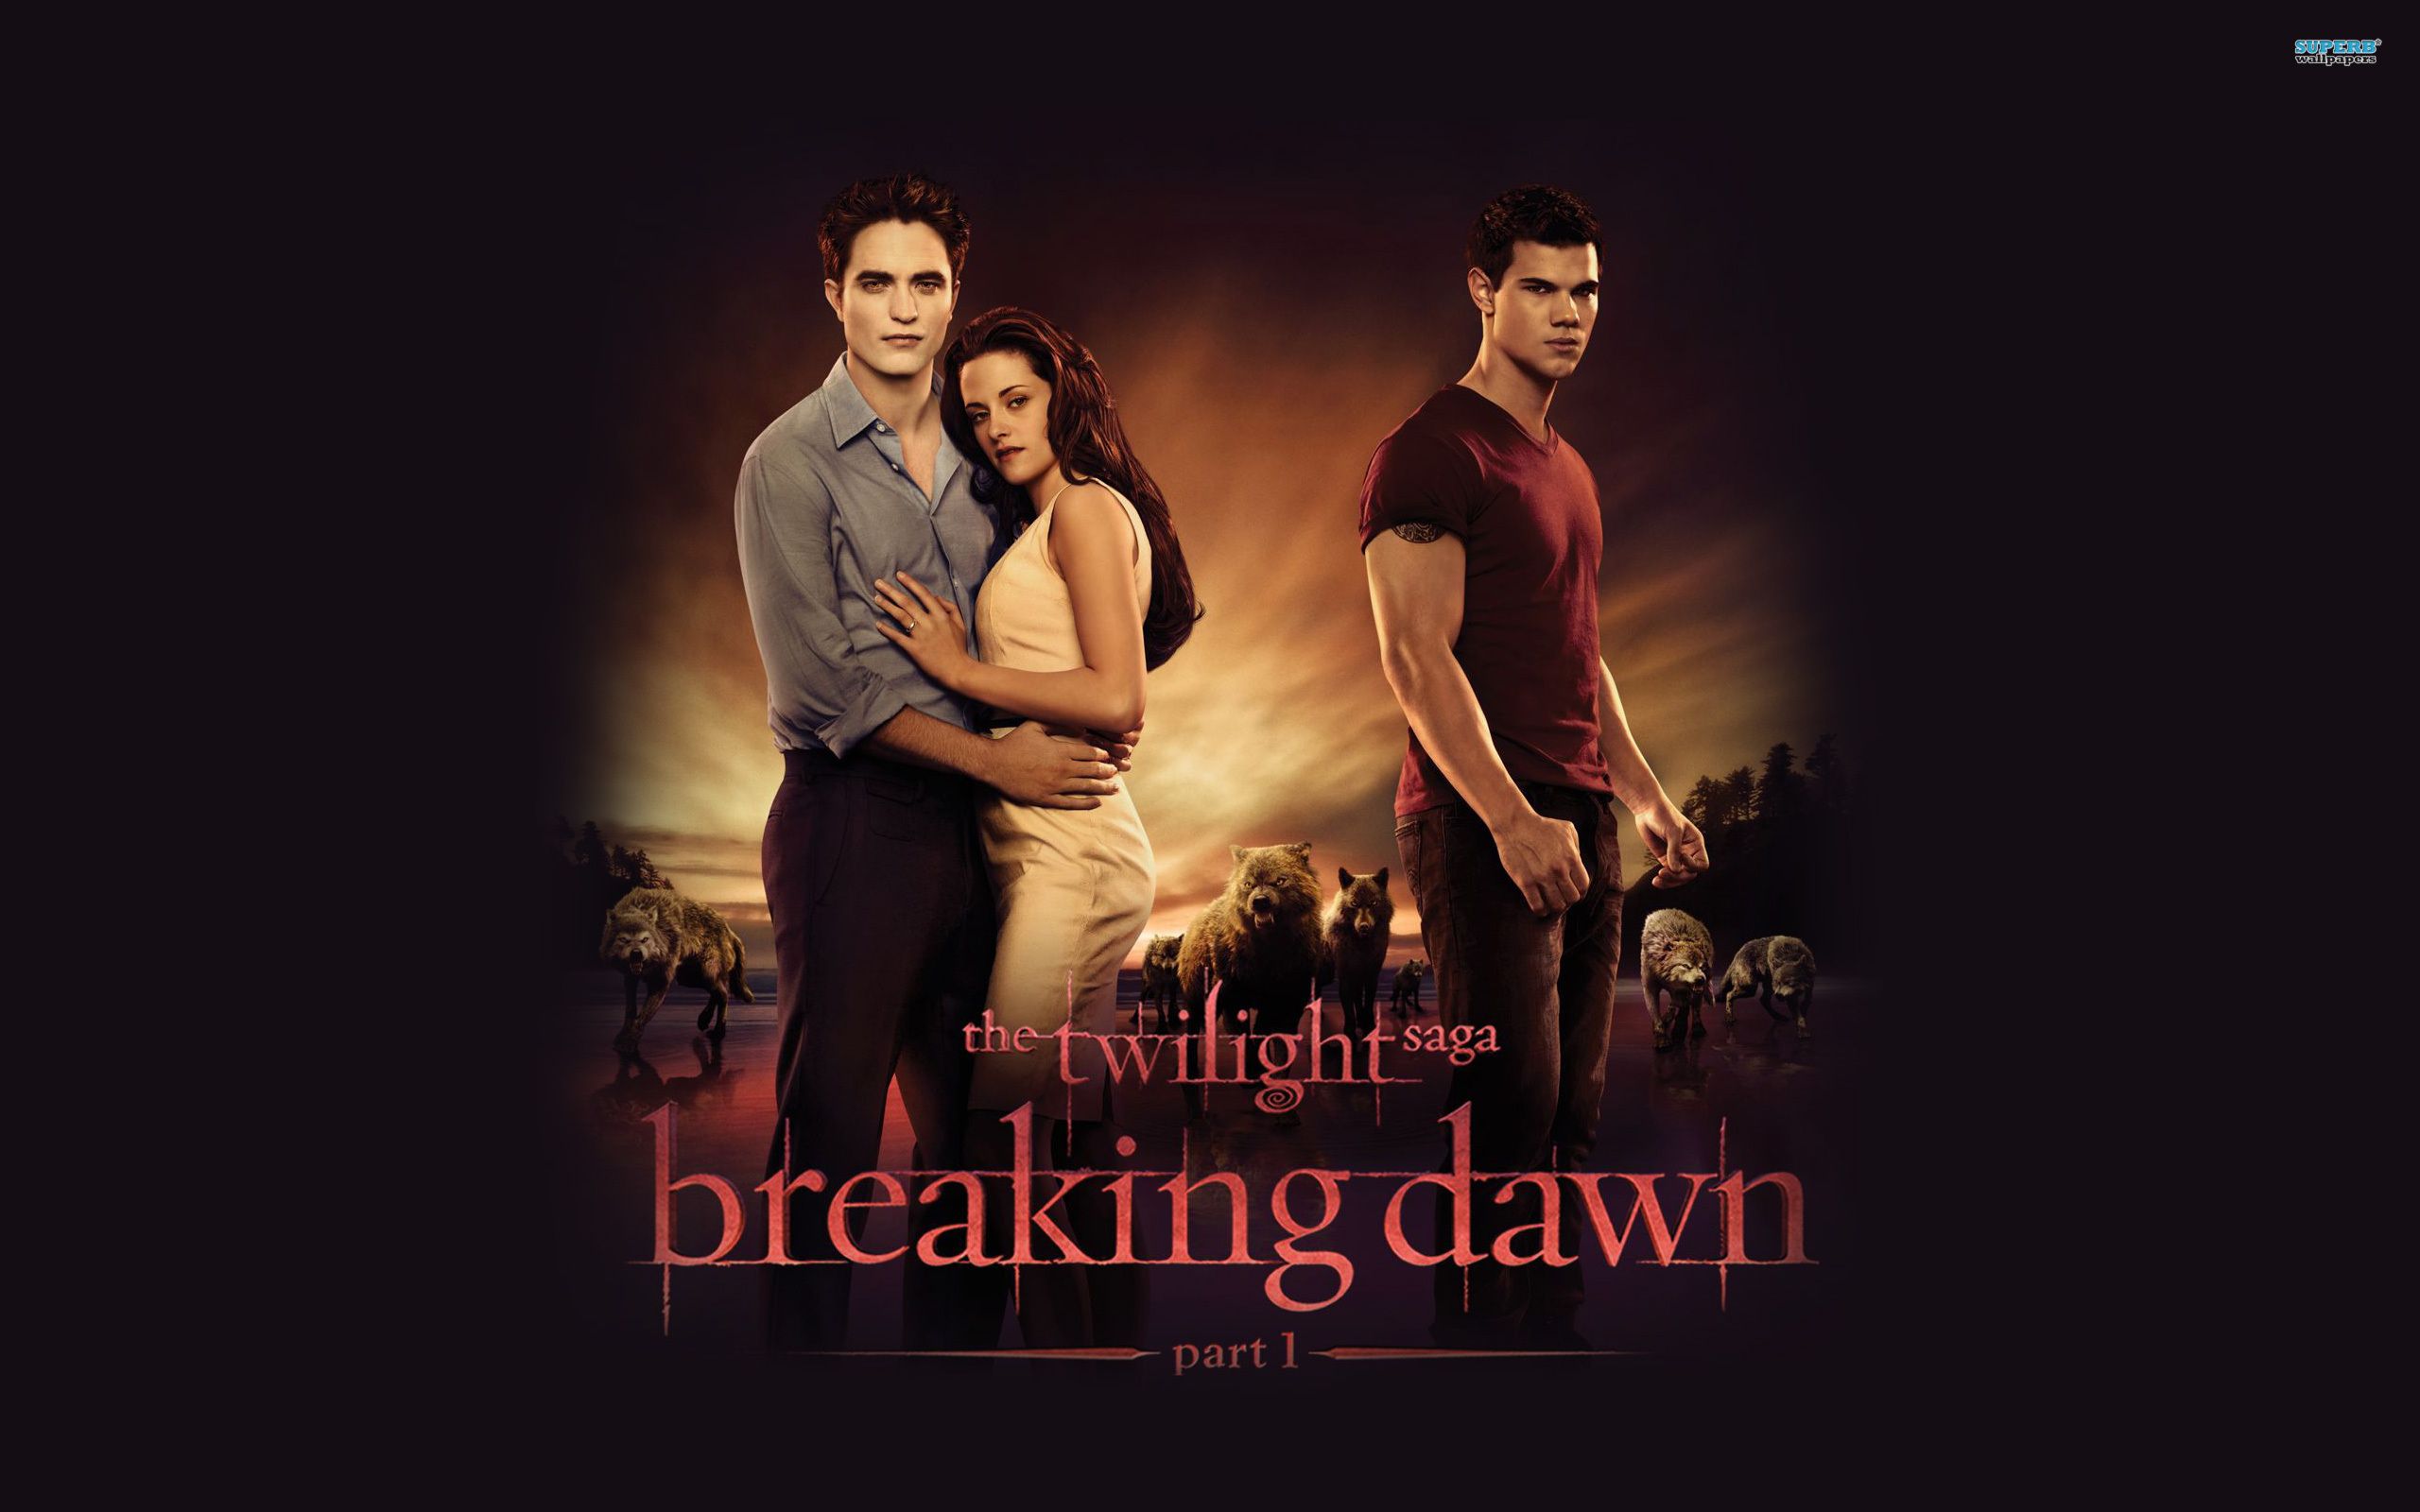 The Twilight Saga Breaking Dawn Part 1 wallpaper - Movie